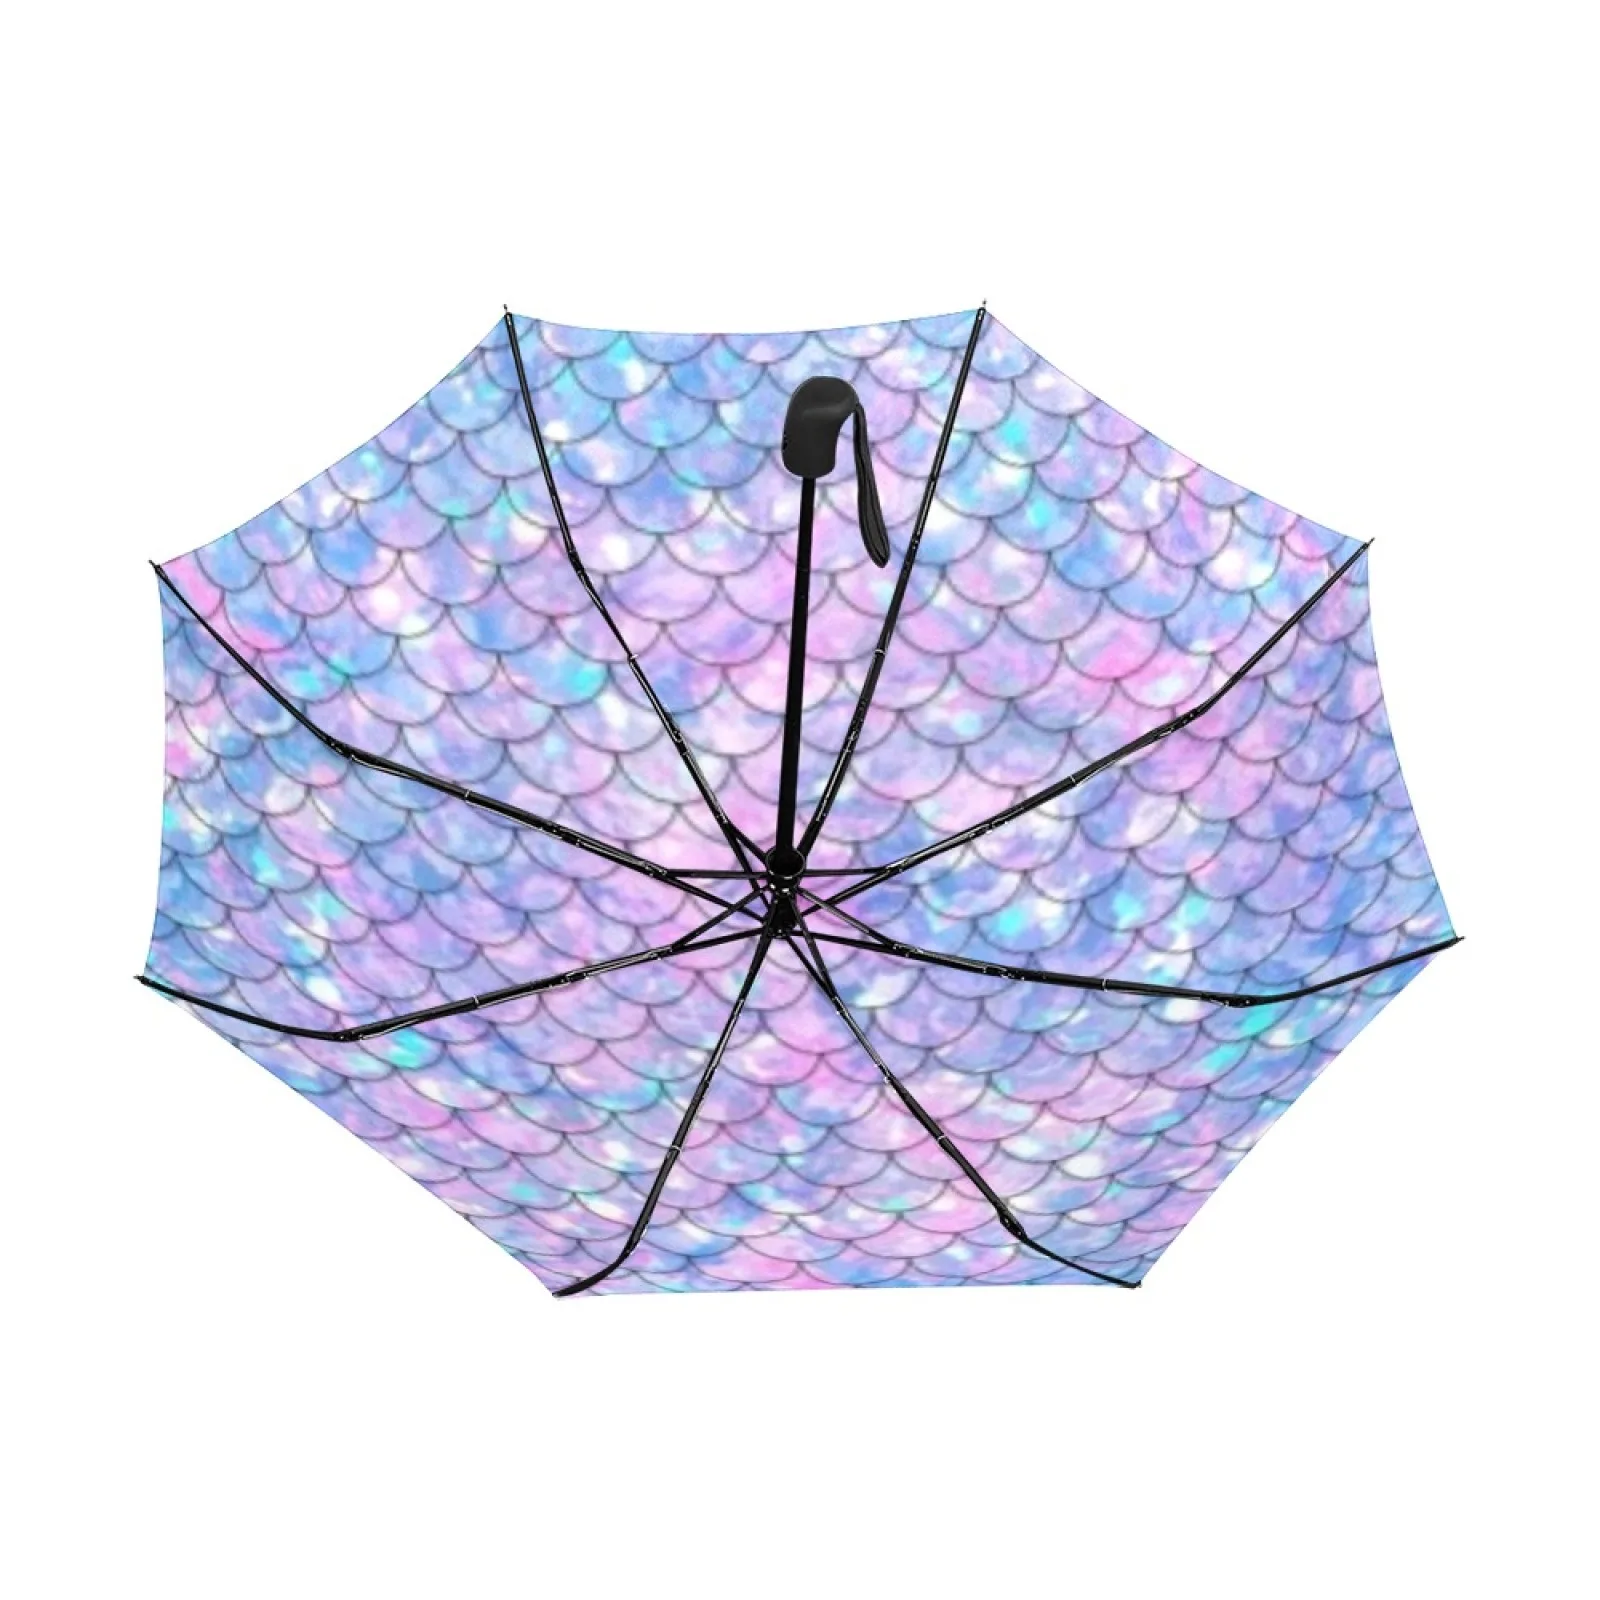 

Fish Scales Automatic Tri Fold Umbrella Sun Anti-UV Foldable Compact Light Weight Protection (Inside Printing) Travel Umbrella